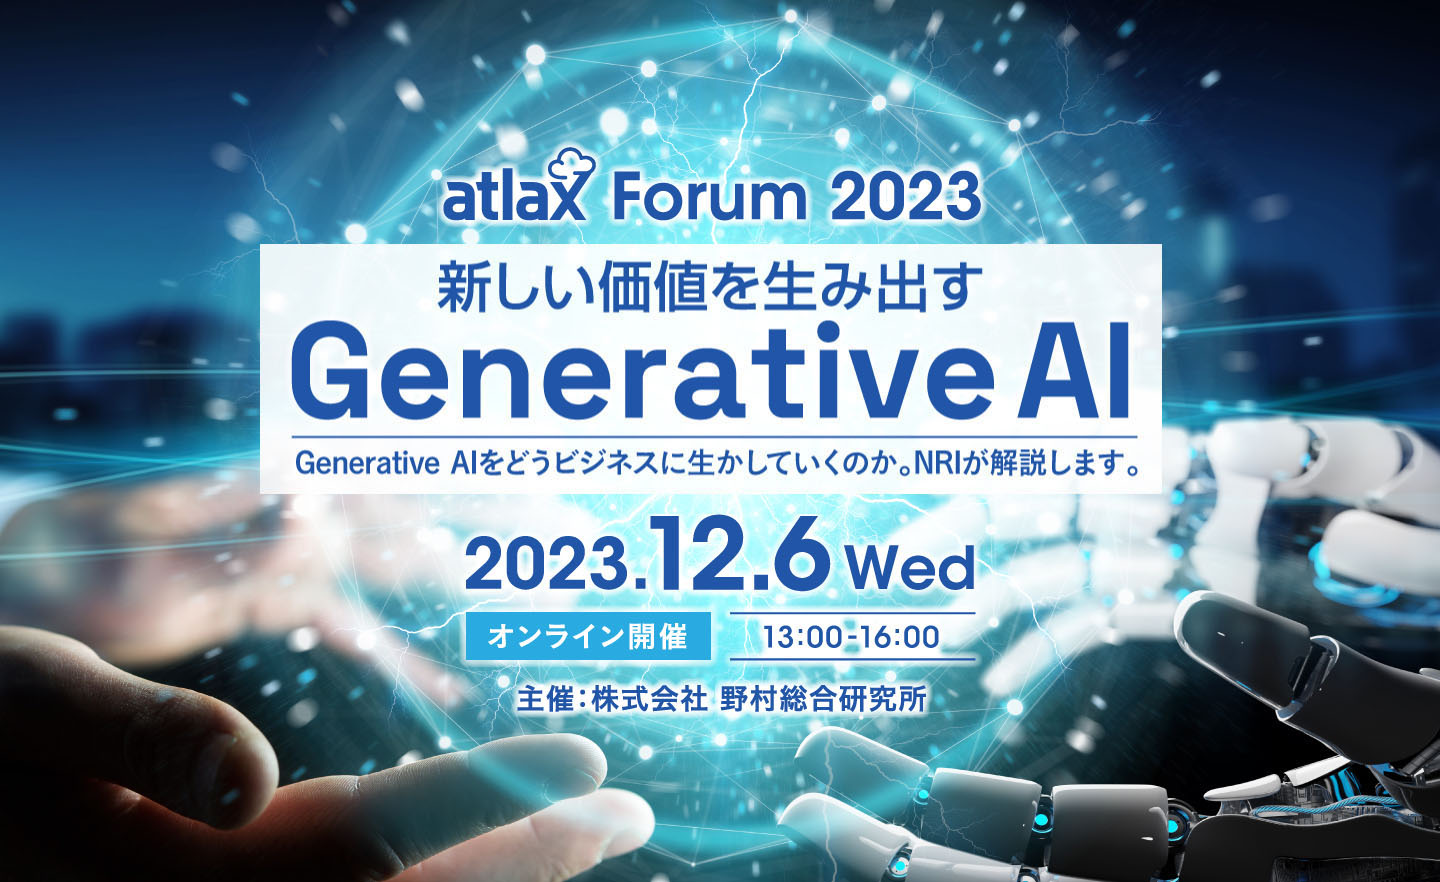 atlax Forum 2023 特設ページ - 新しい価値を生み出す Generative AI